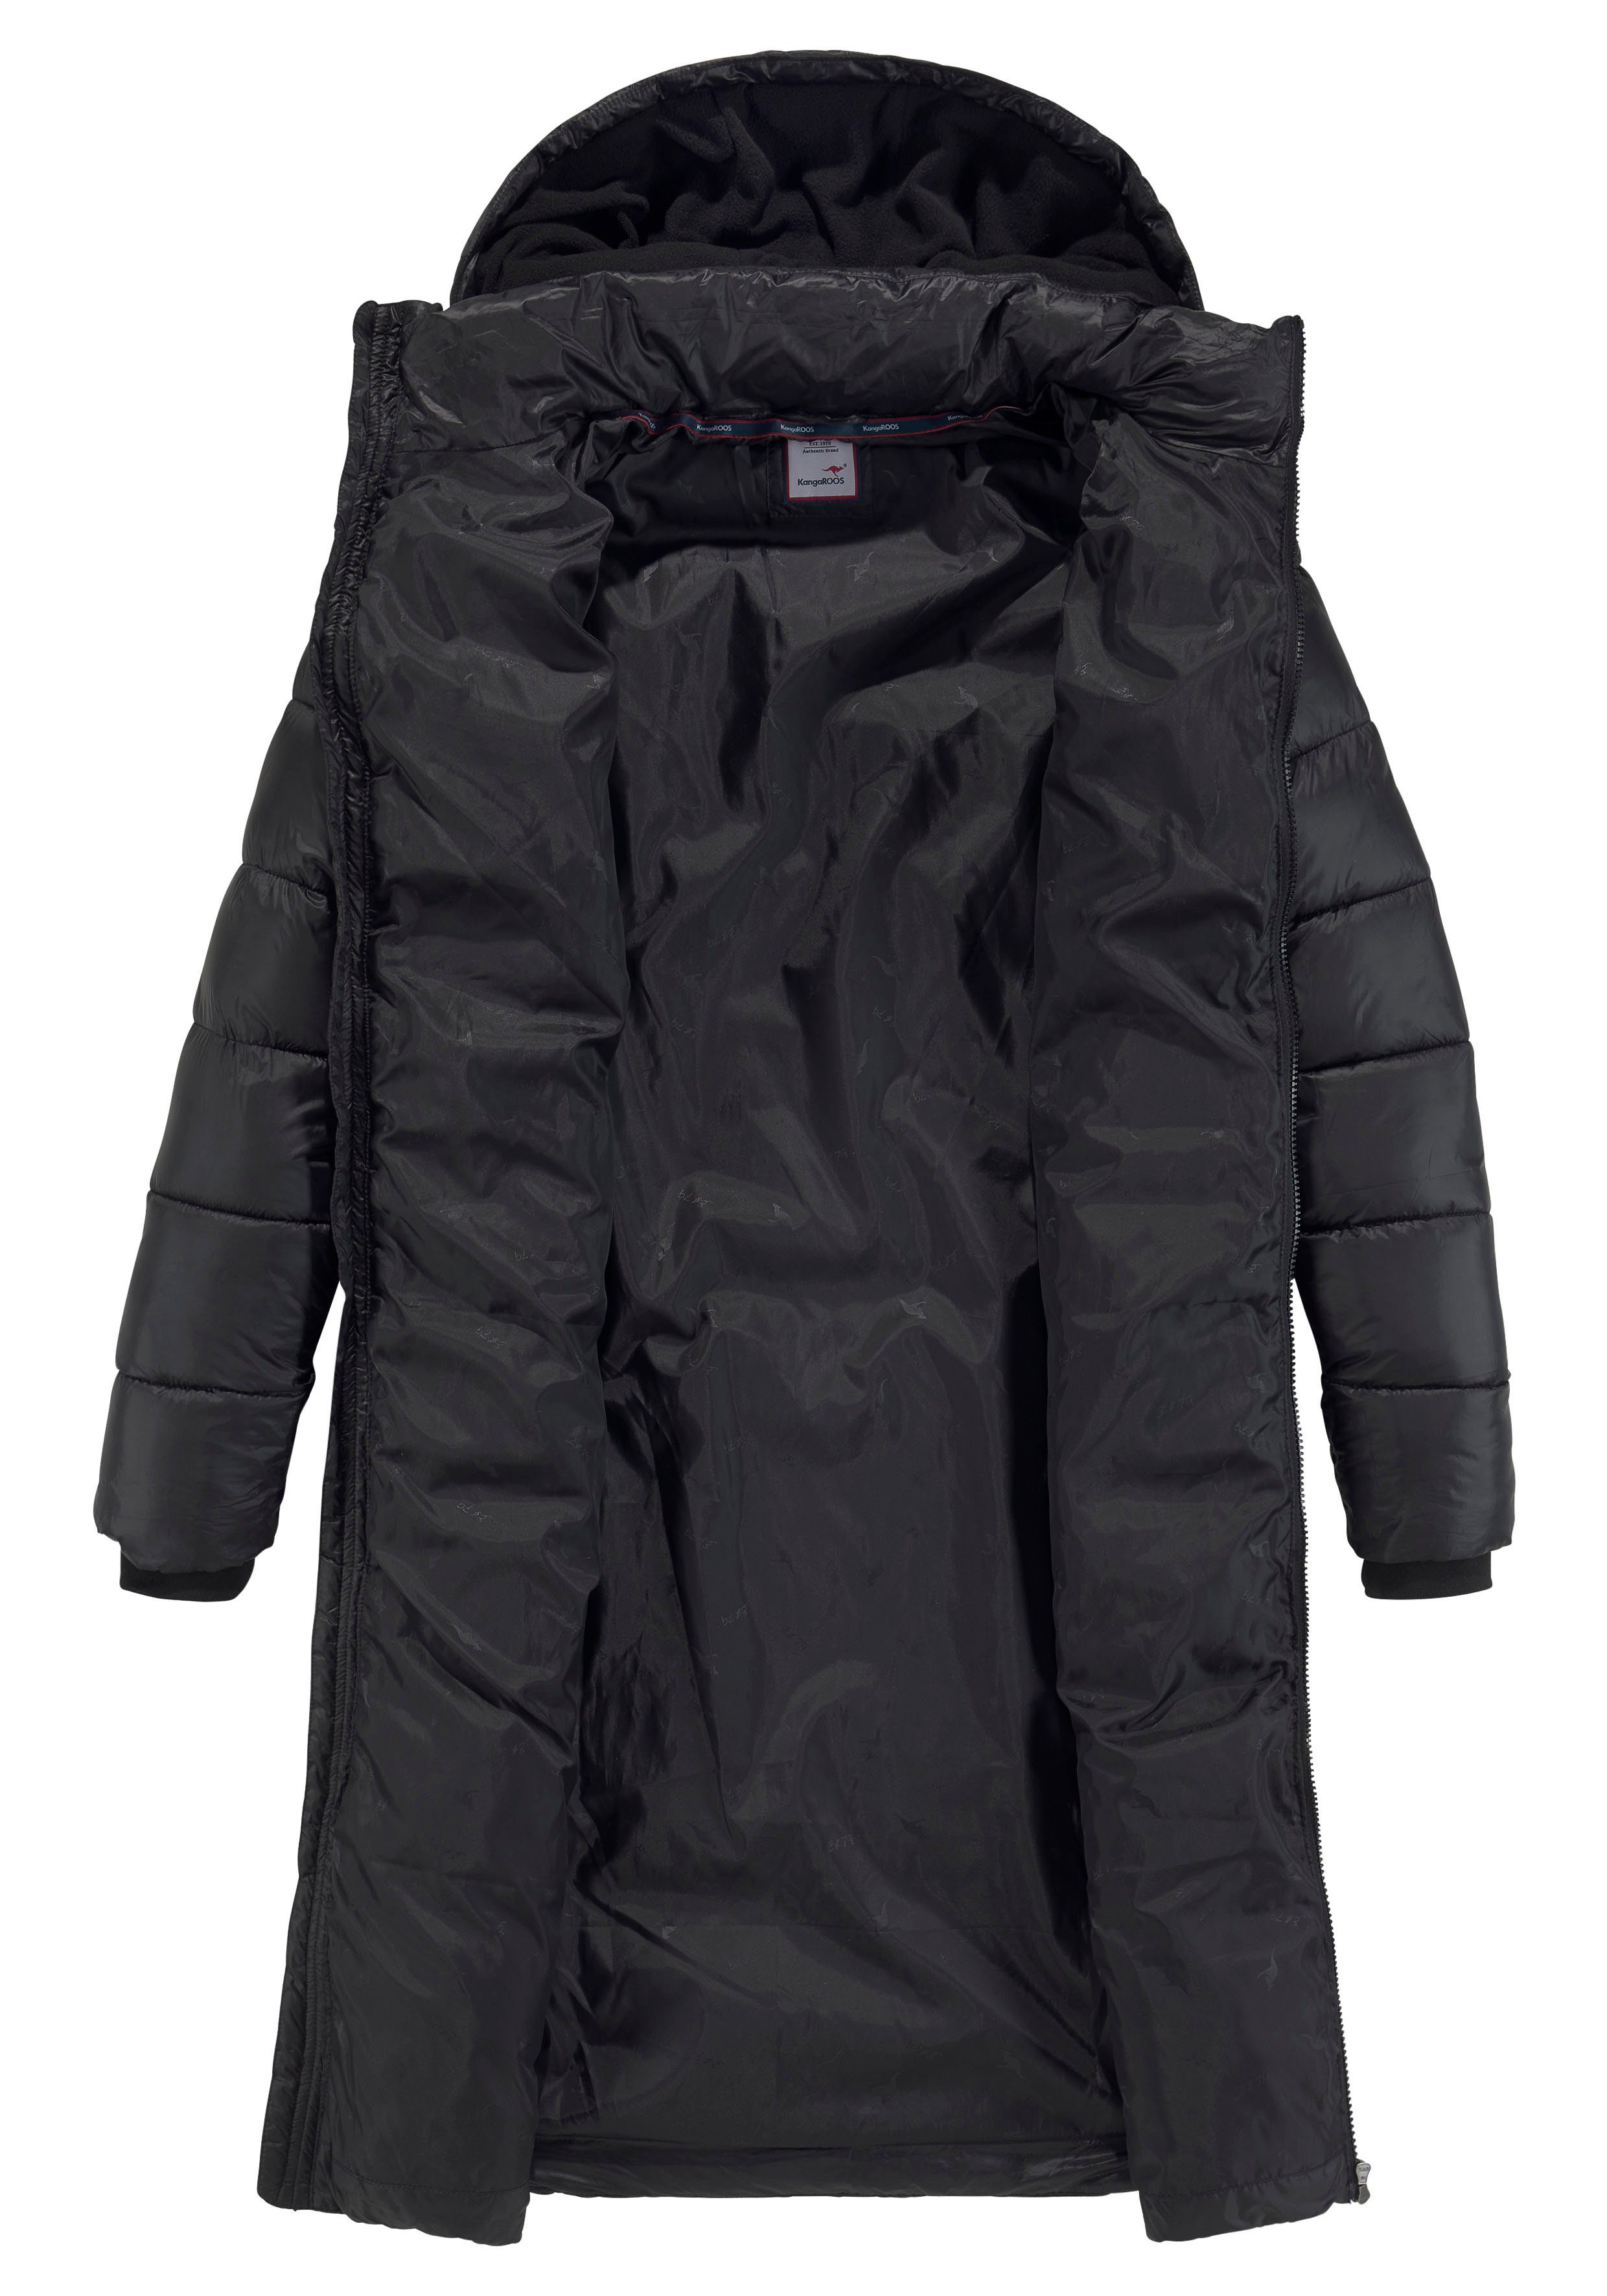 KangaROOS Steppmantel mit abnehmbarer Kapuze nachhaltigem black (Jacke Material) aus